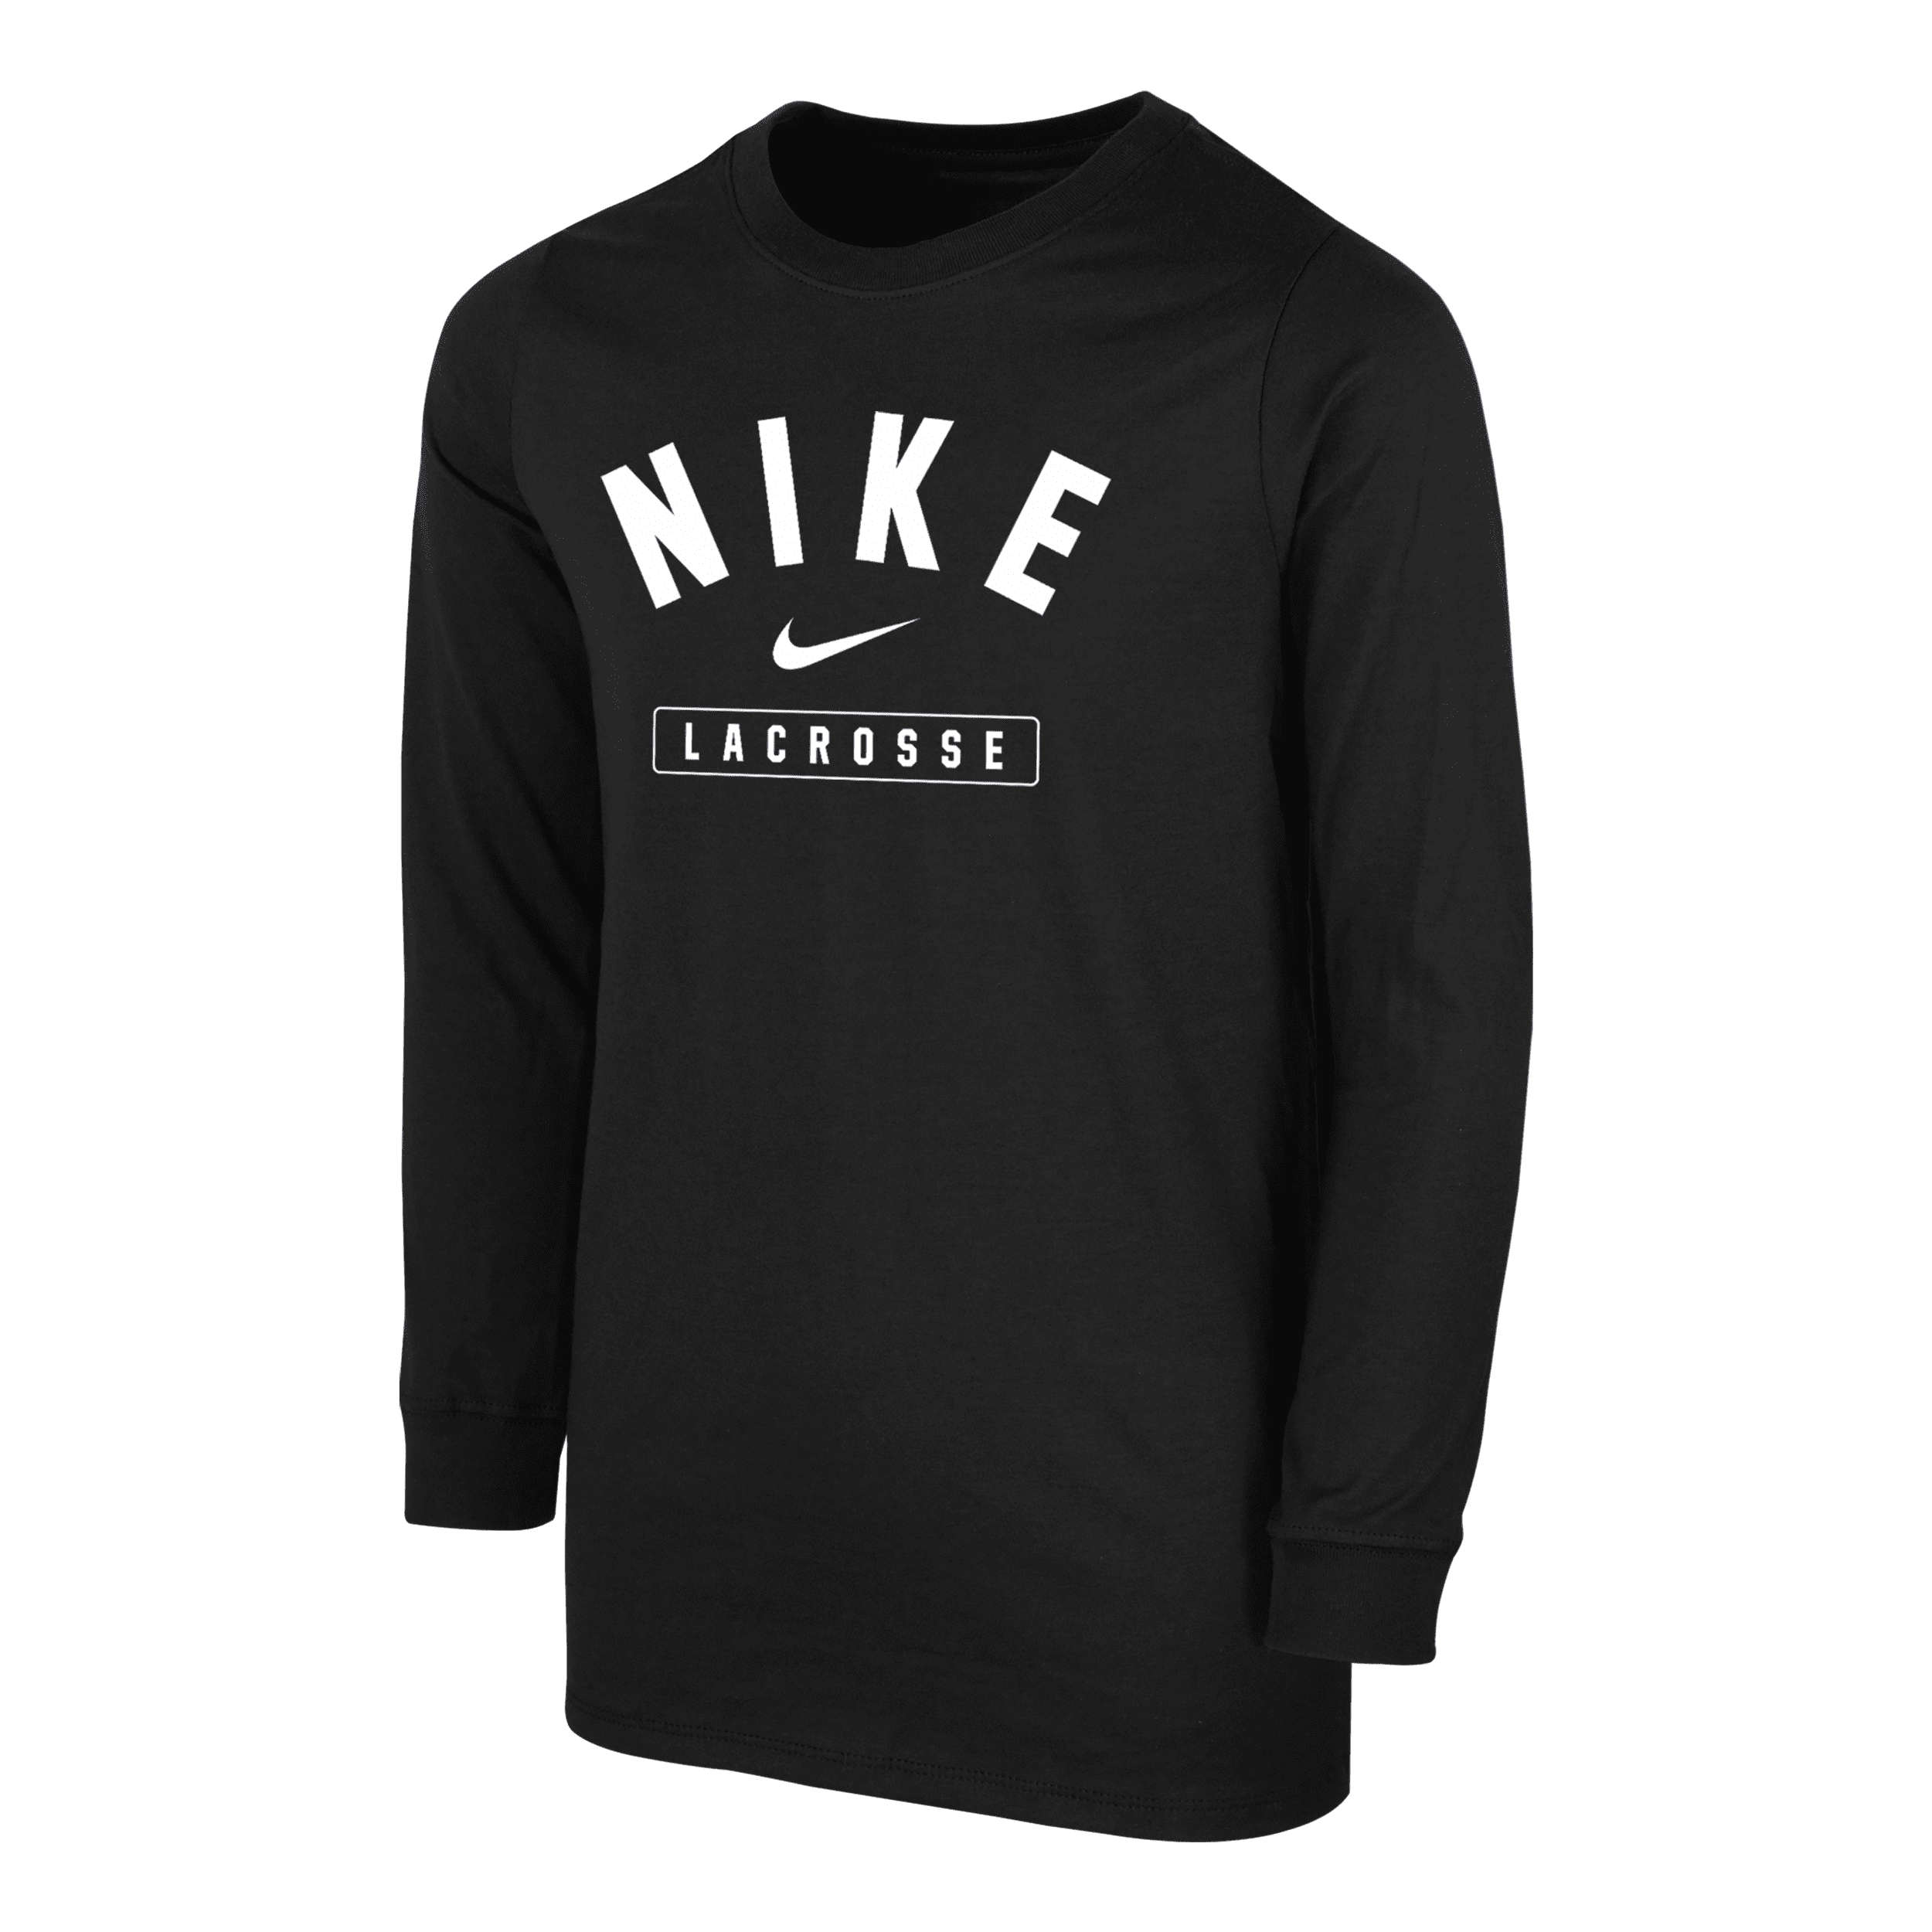 Nike Lacrosse Big Kids' (boys') Long-sleeve T-shirt In Black